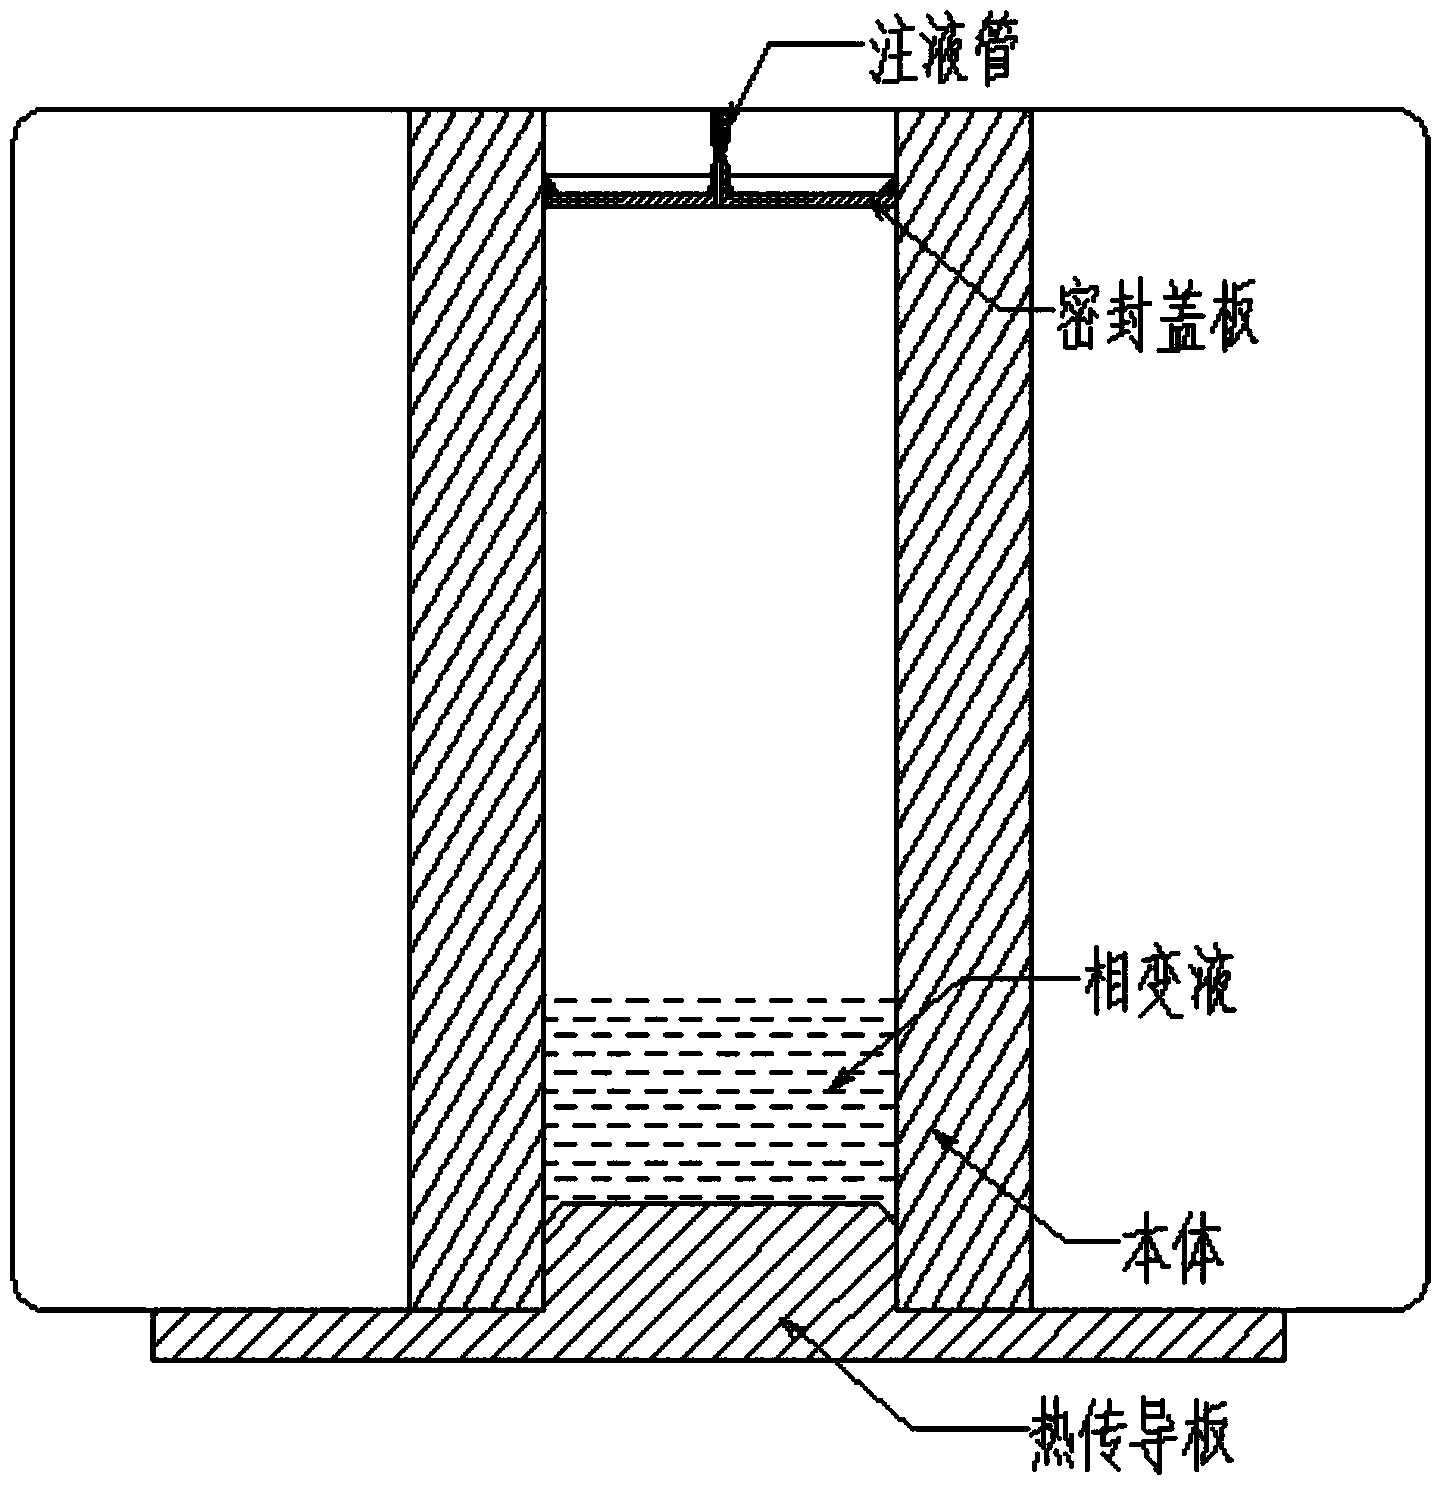 Mining lamp phase change liquid and heat radiator thereof